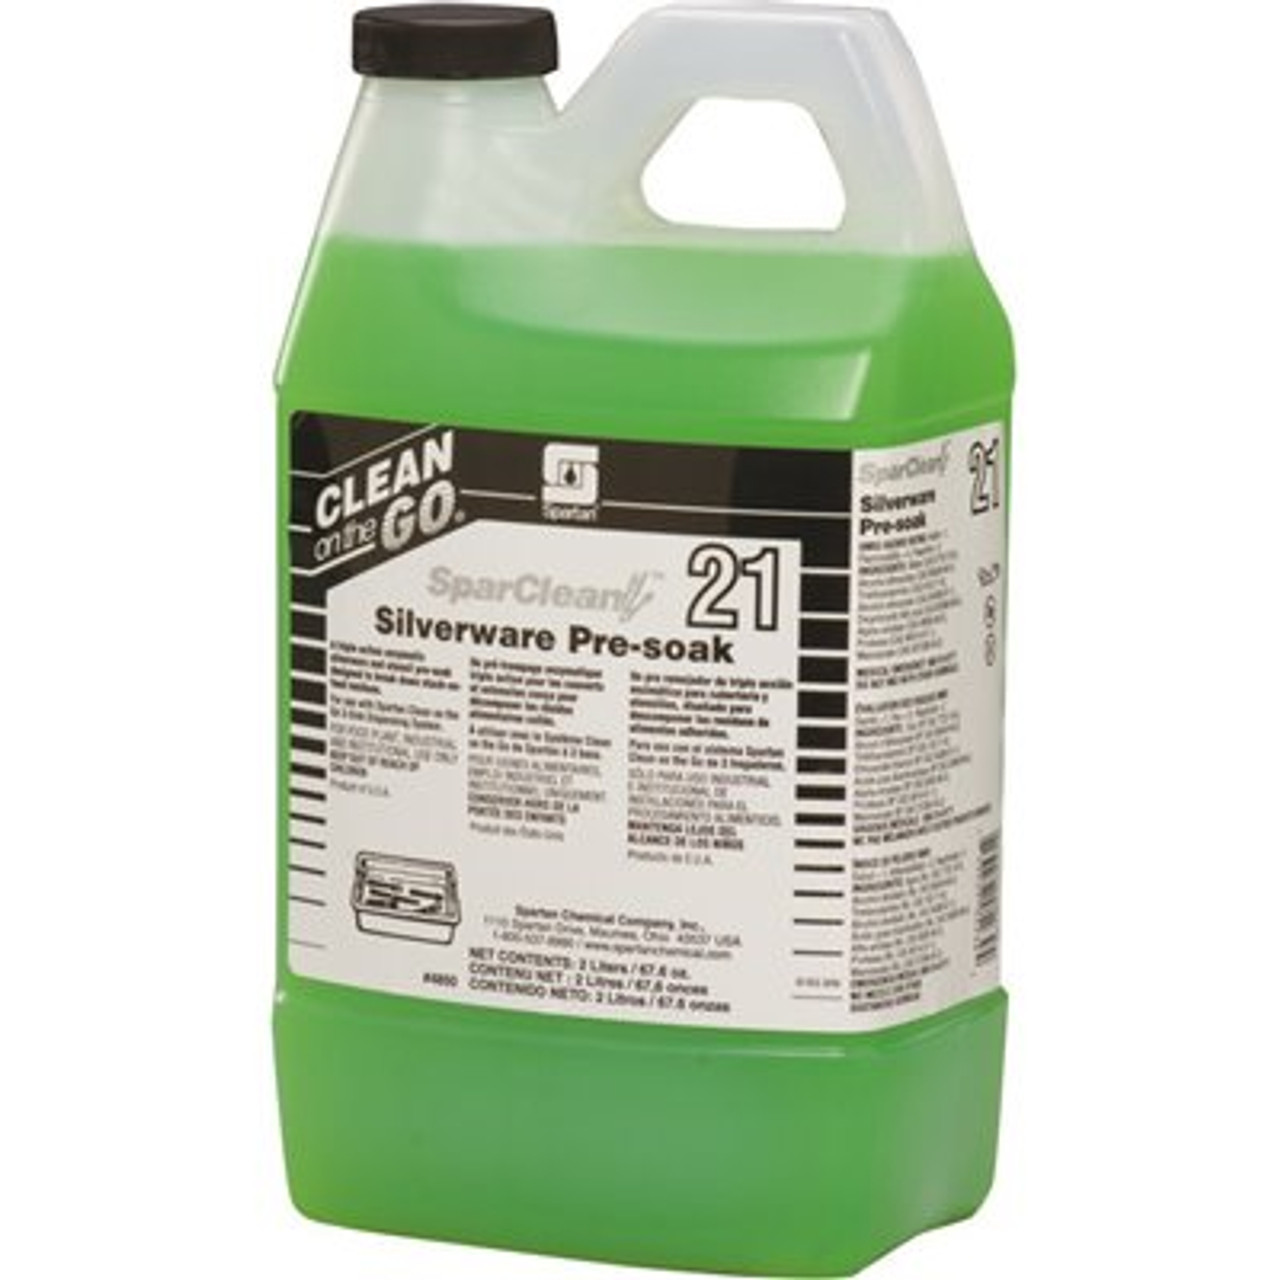 Spartan Chemical Co. Sparclean 2 Liter Silverware Pre-Soak (4 Per Pack)